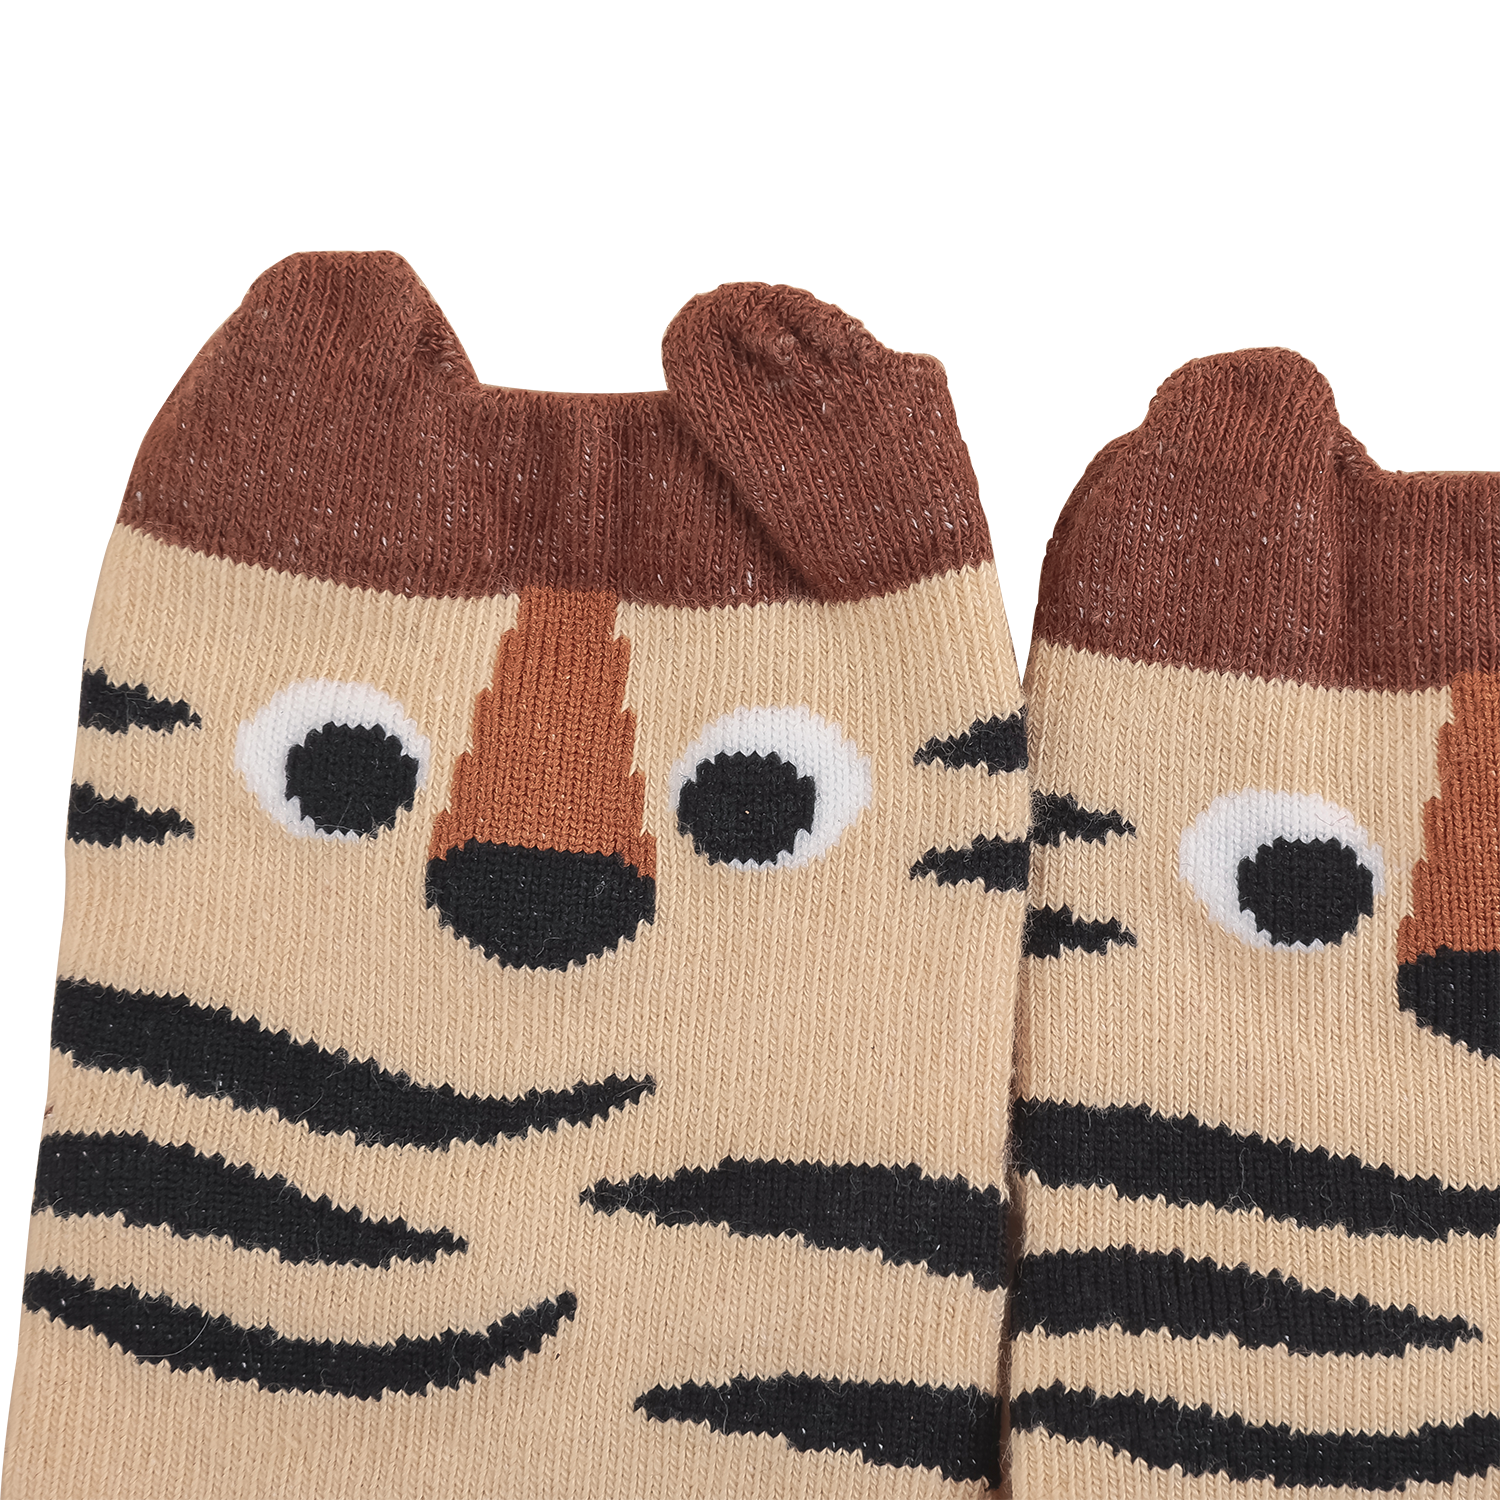 Tiger baby socks